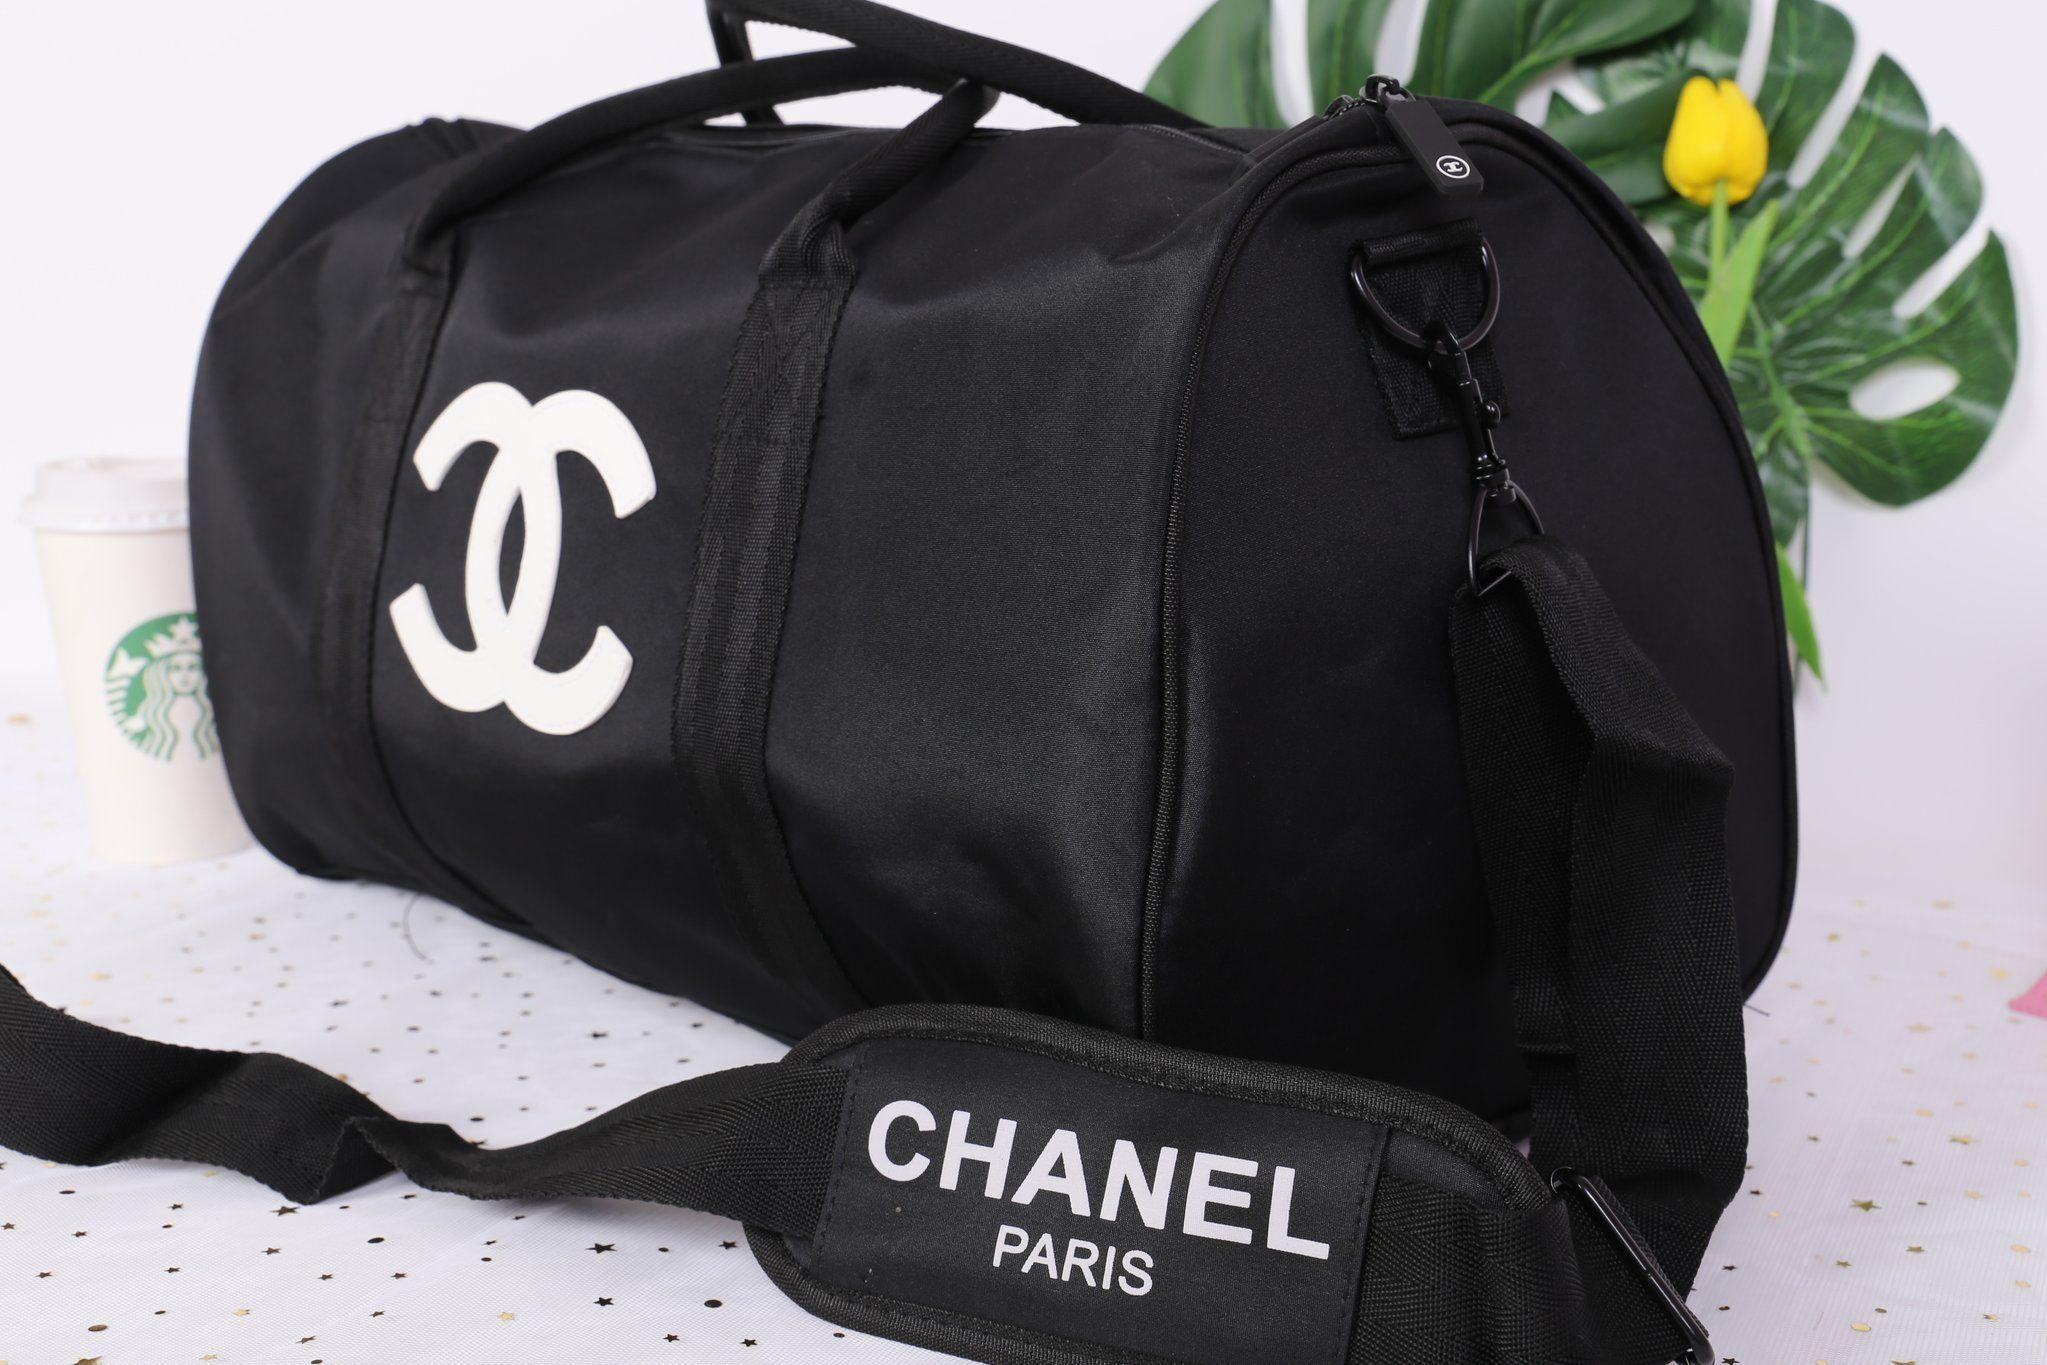 Chanel White CC Logo - Chanel White CC Logo Travel Gym Duffle Weekend Bag Large Vip Gift